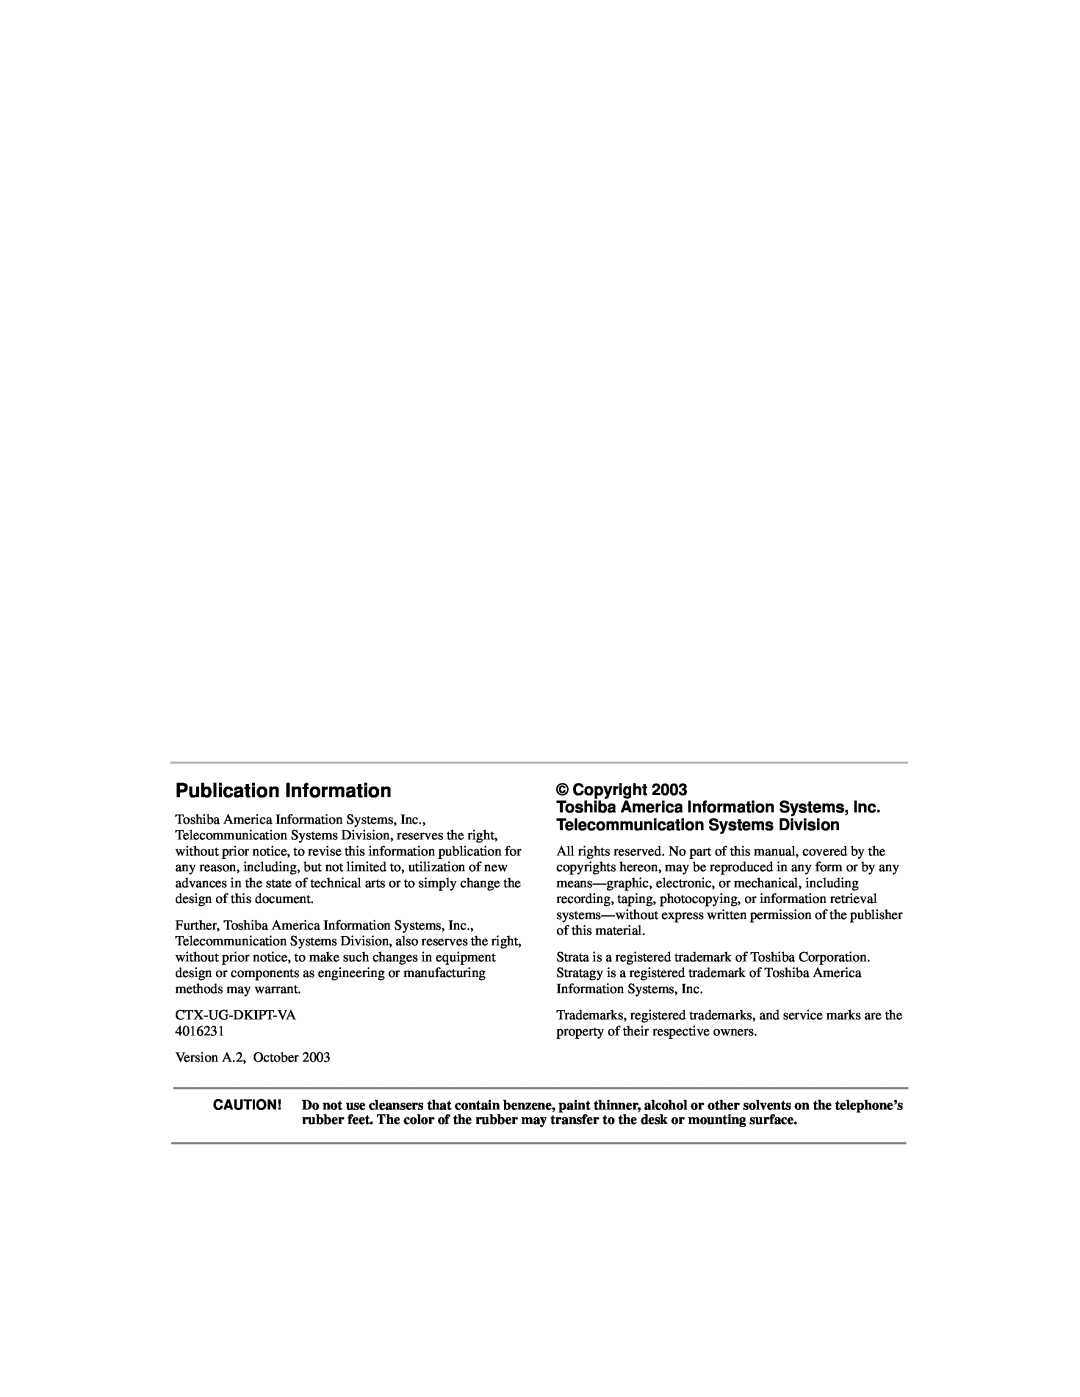 Toshiba IPT, DKT manual Publication Information, Copyright Toshiba America Information Systems, Inc 